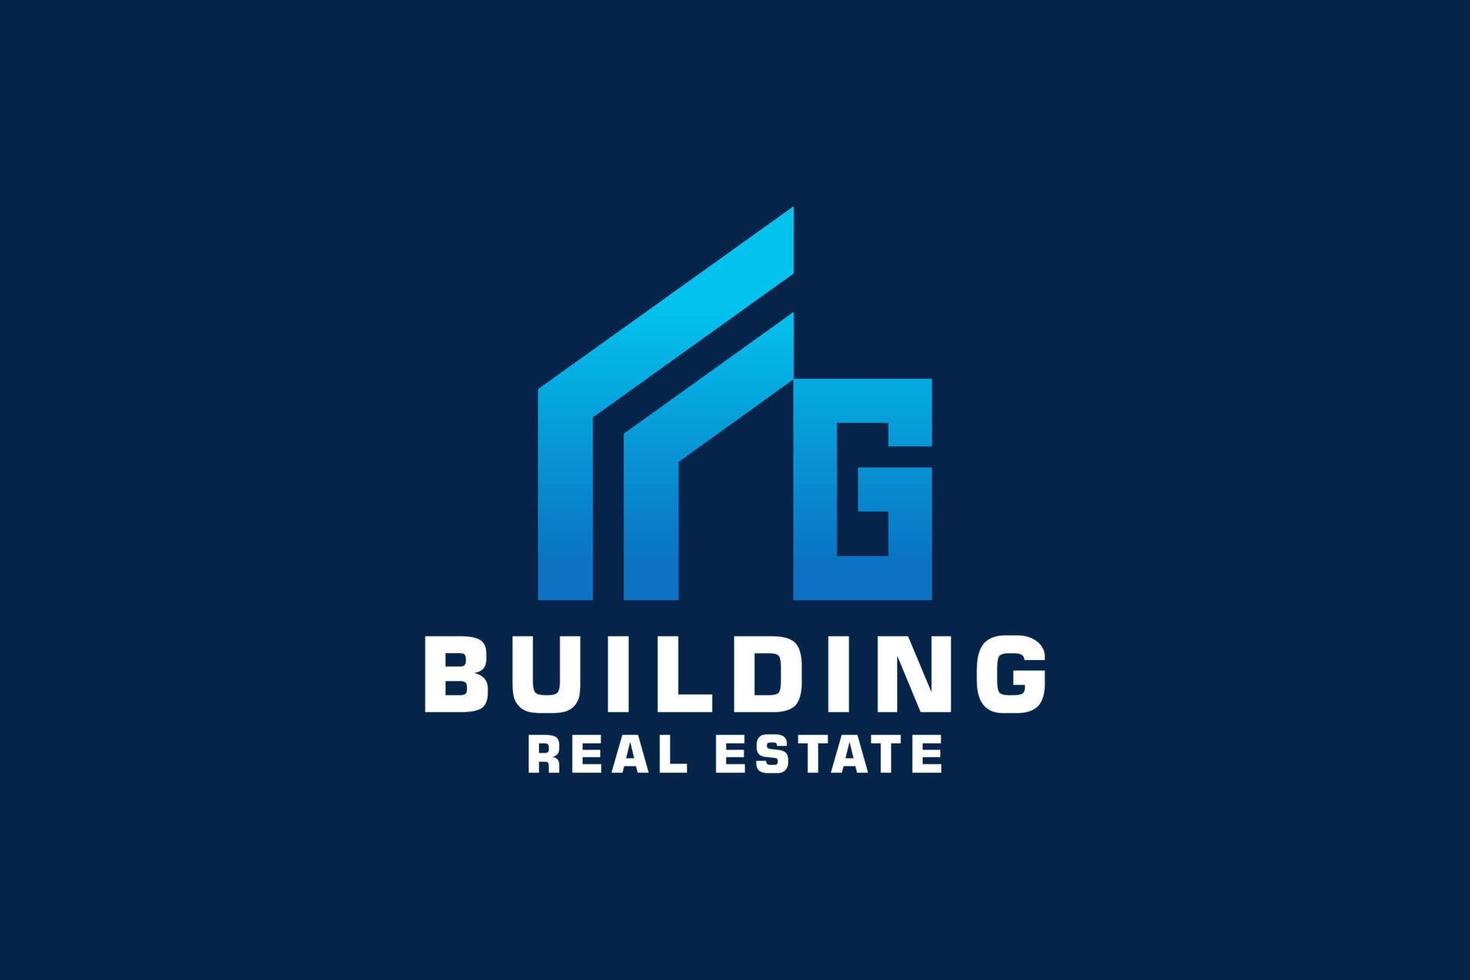 Initials letter G realtor, real estate and property business logo design vector